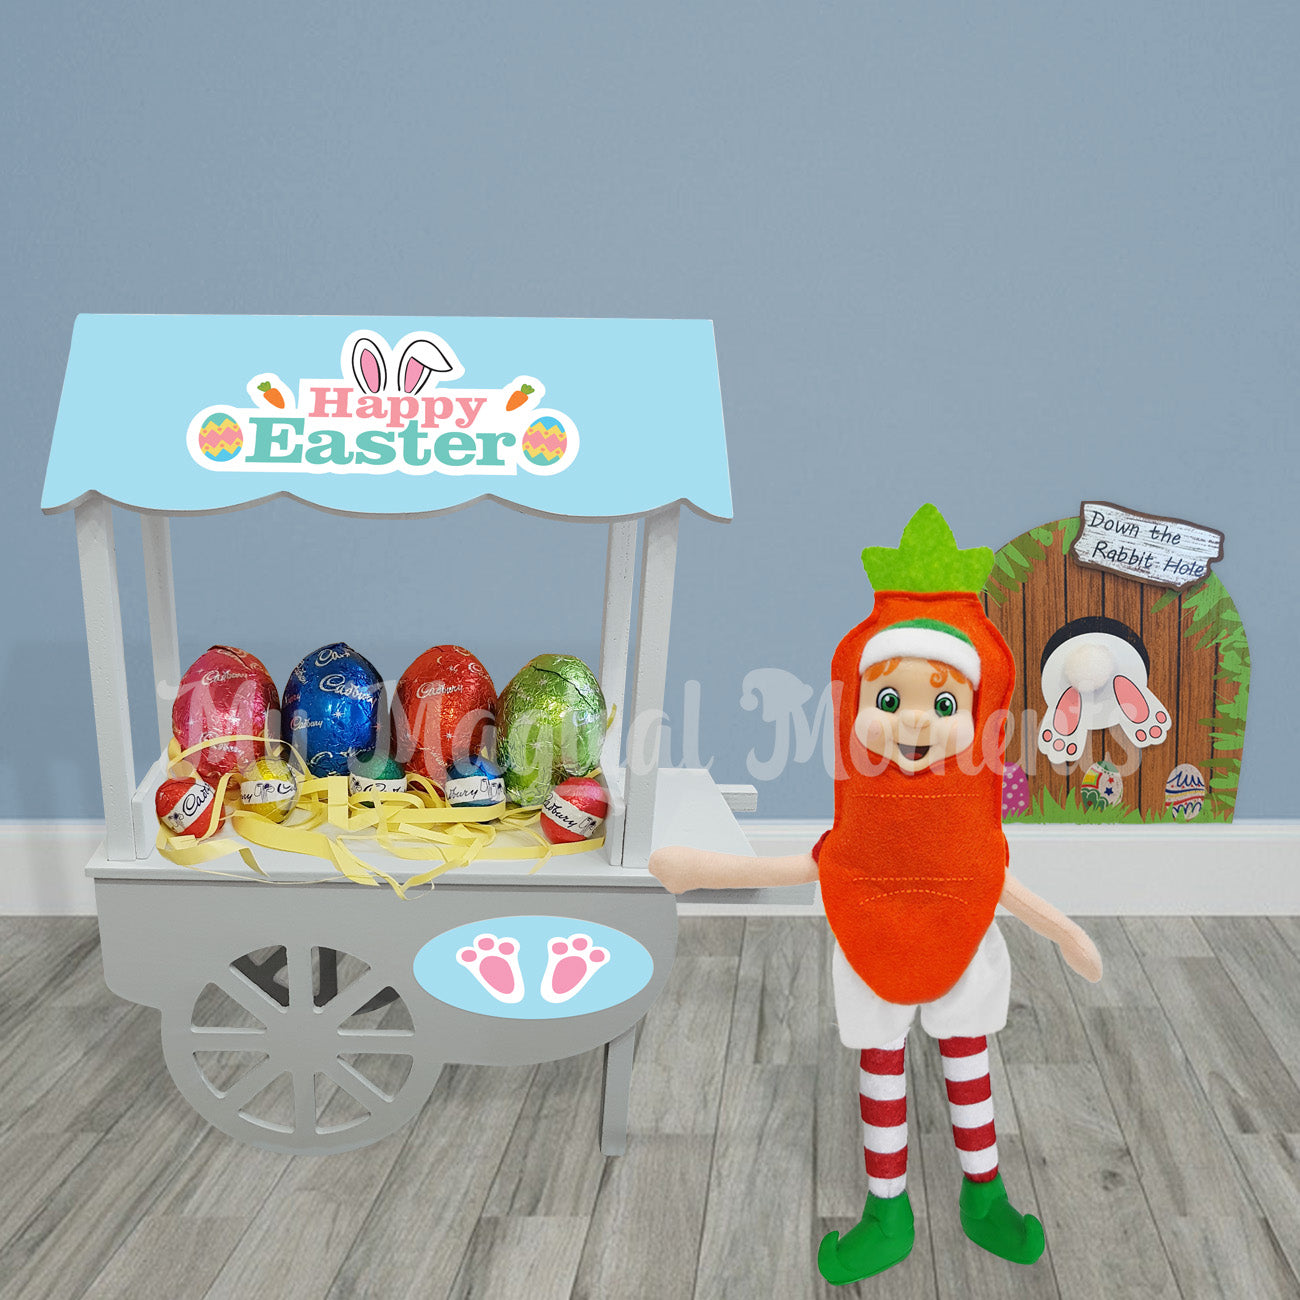 Elf easter display, elf in a carrot with an easter bunny door